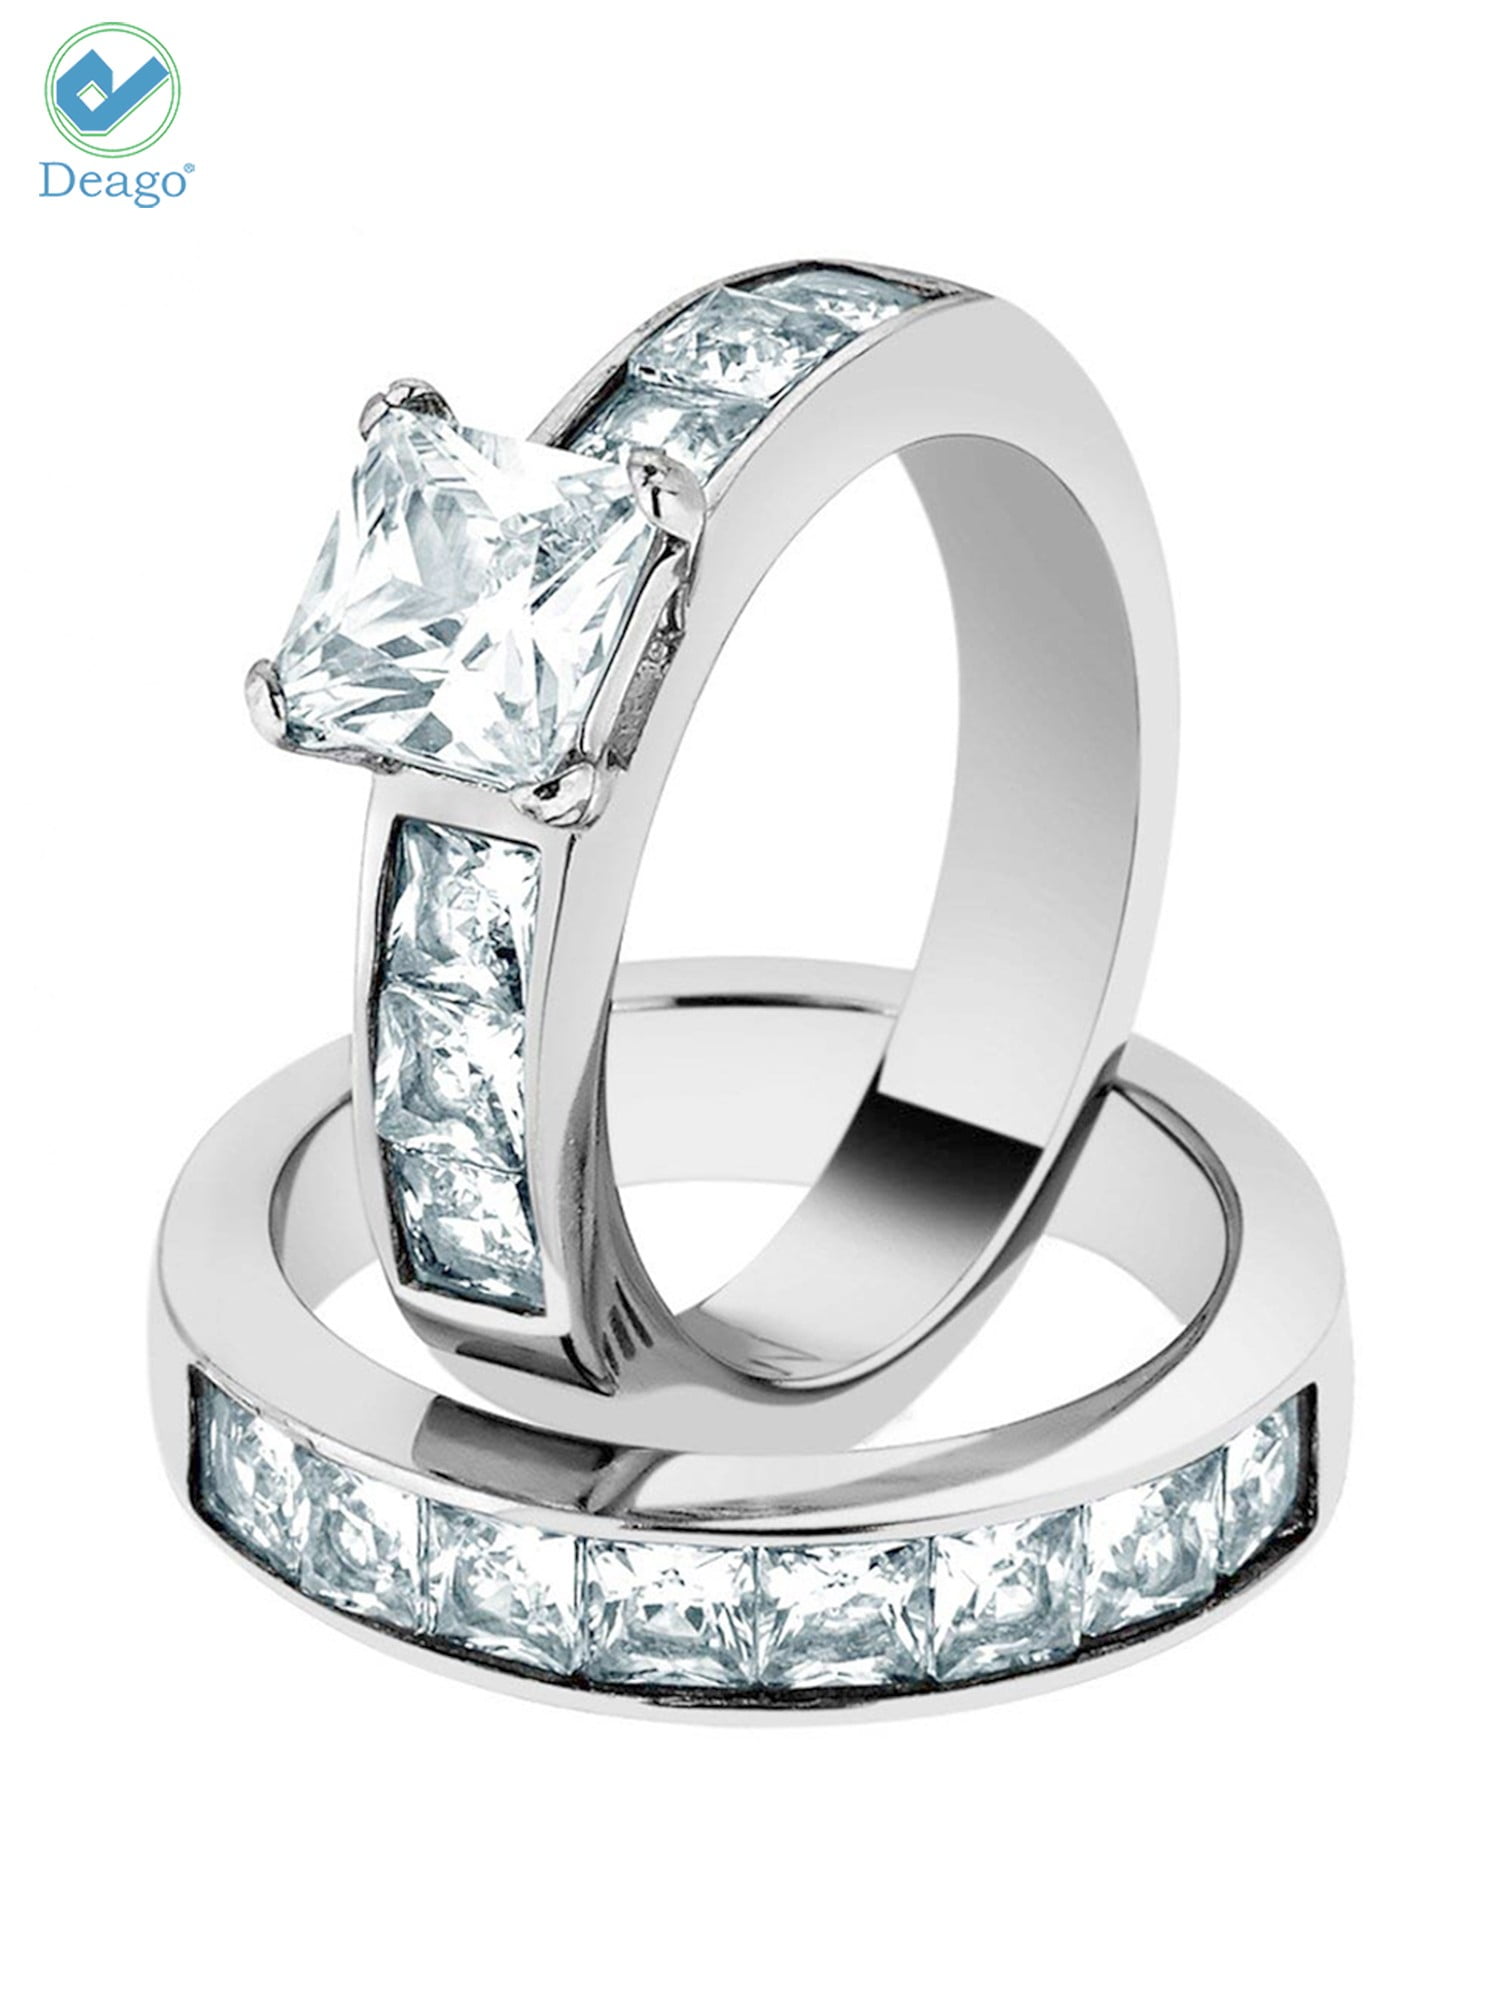 Sparkling White Cubic Zirconia Ring Women Birthday Jewelry Gift Size 6 7 8 9 